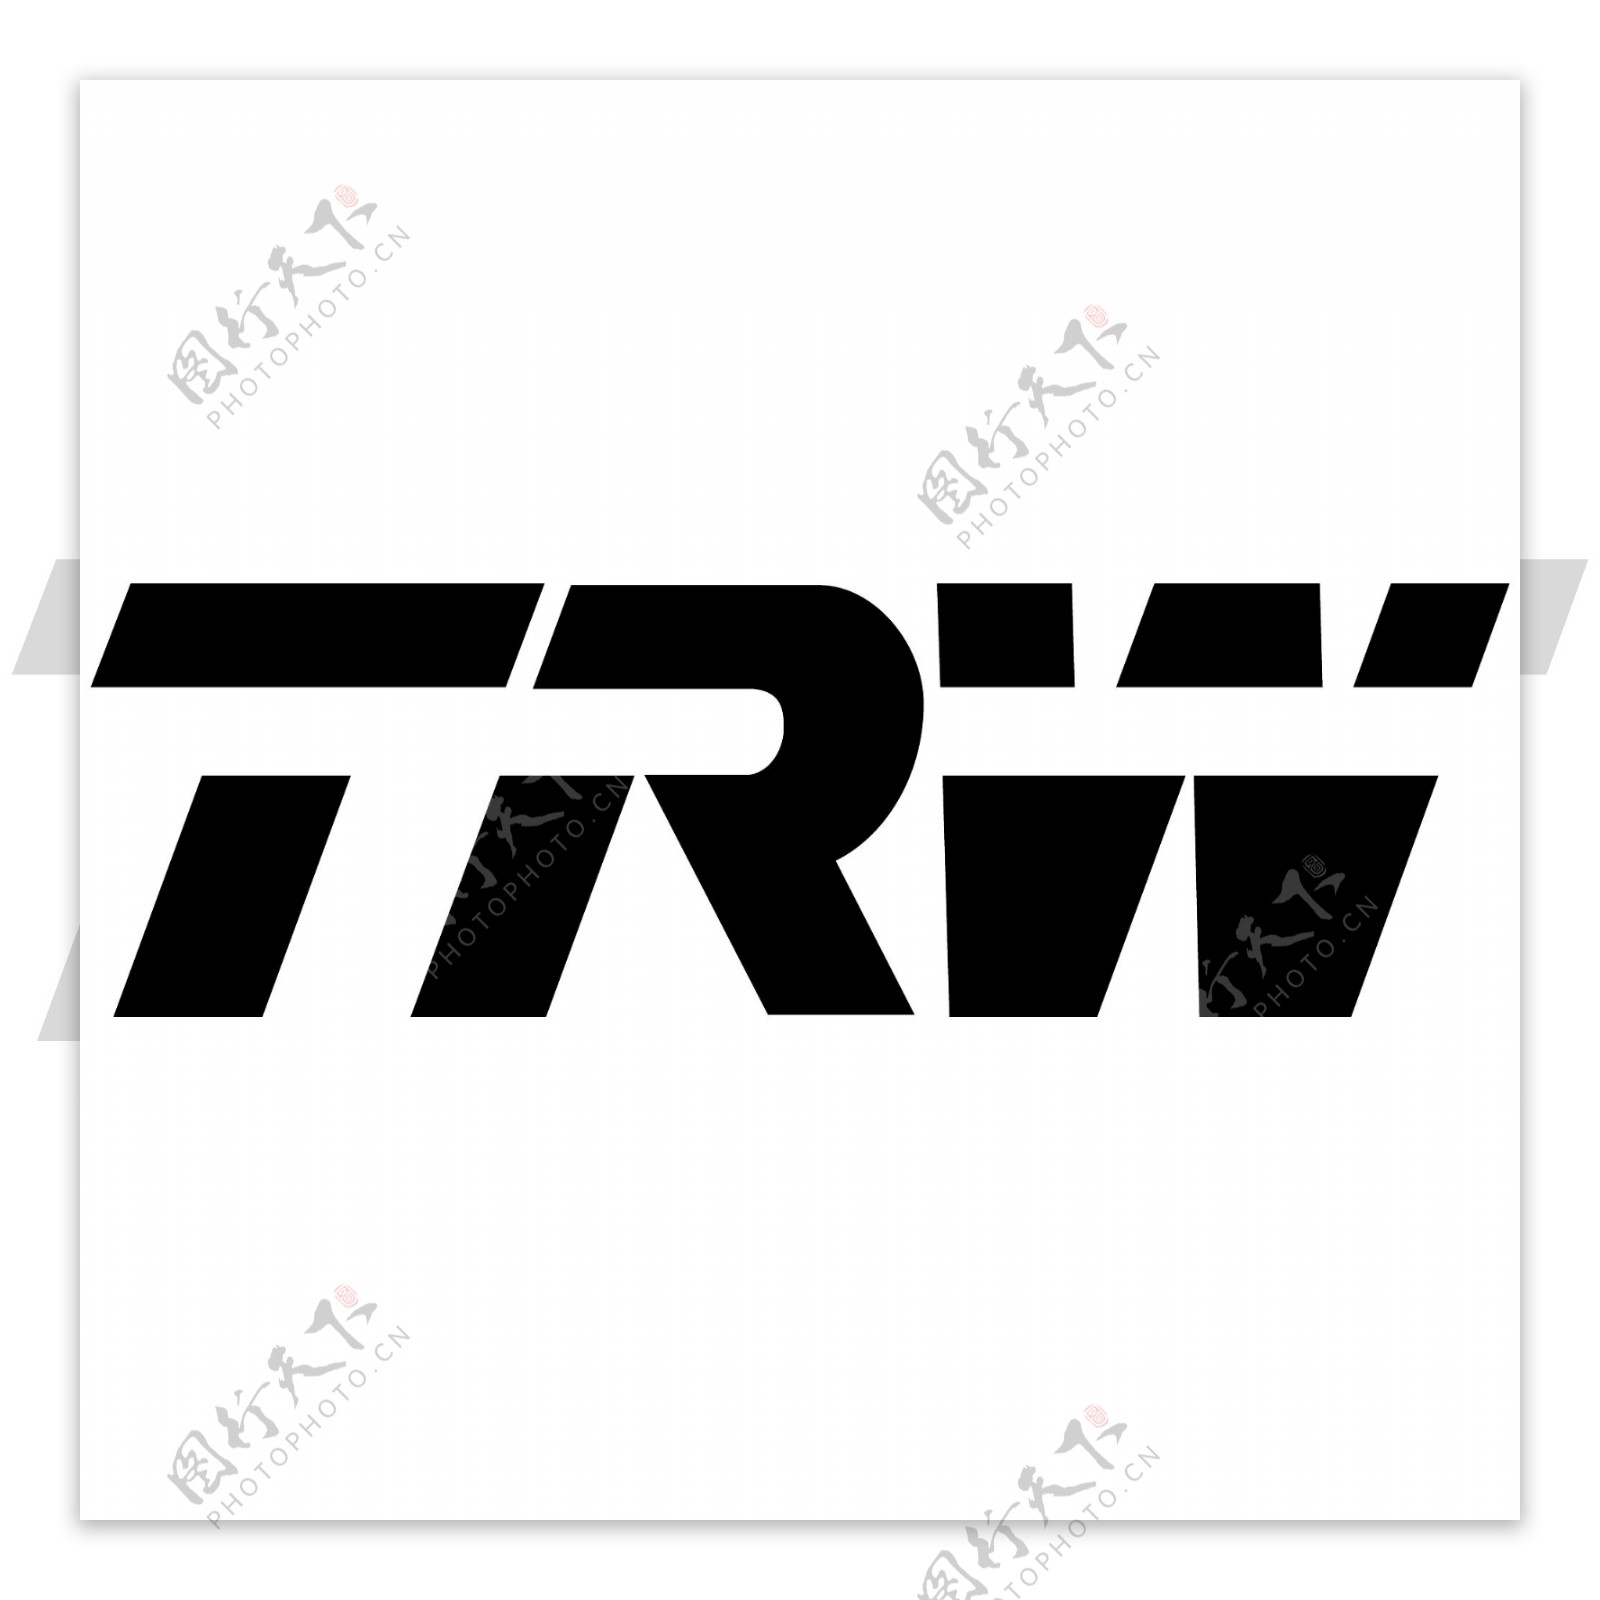 TRW标志图片